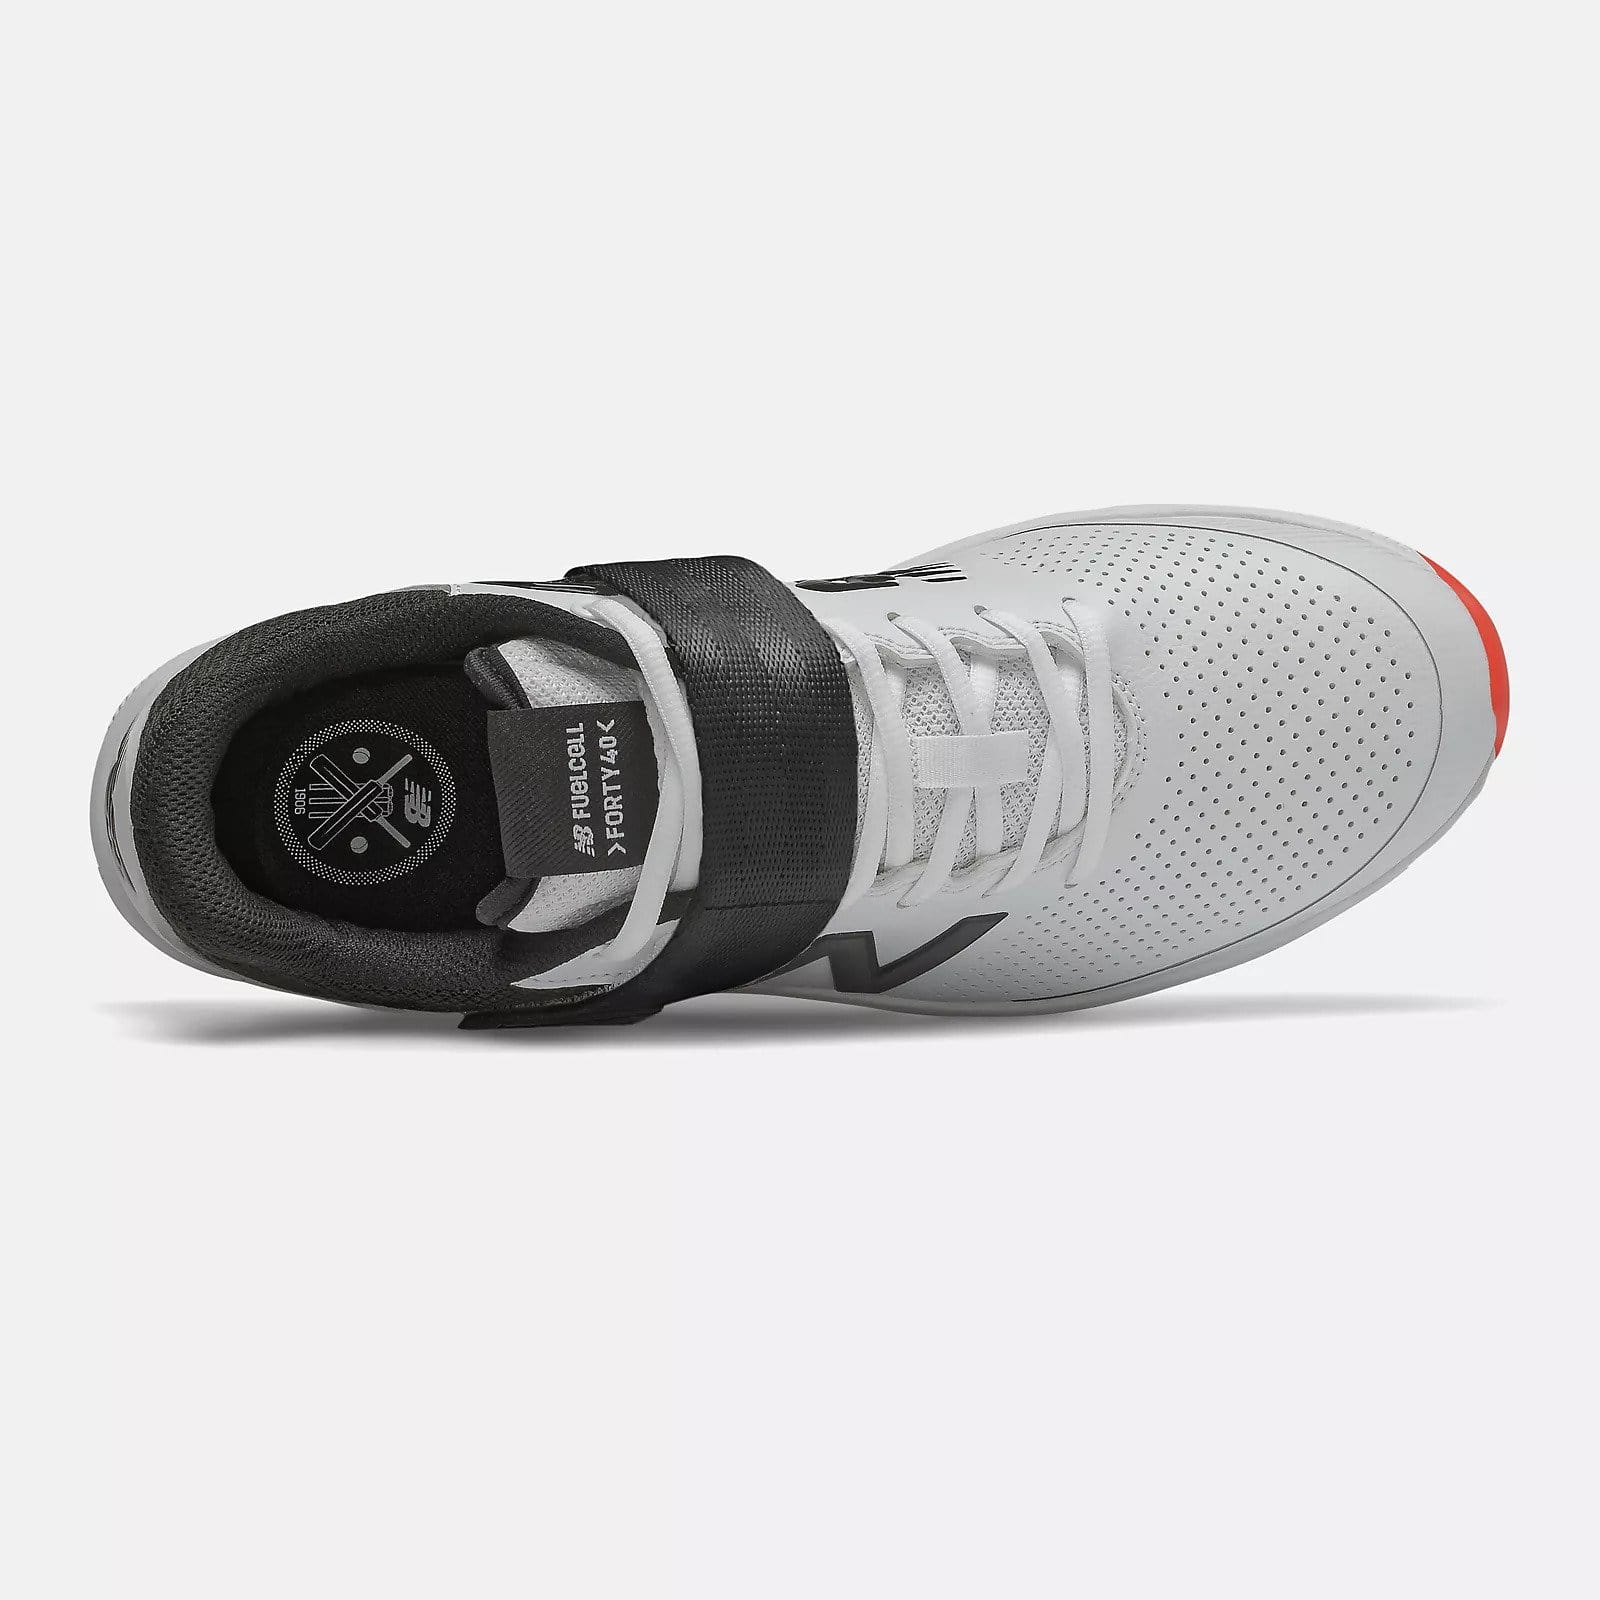 New Balance Footwear New Balance CK4040 v5 Cricket Spike Shoes 2021